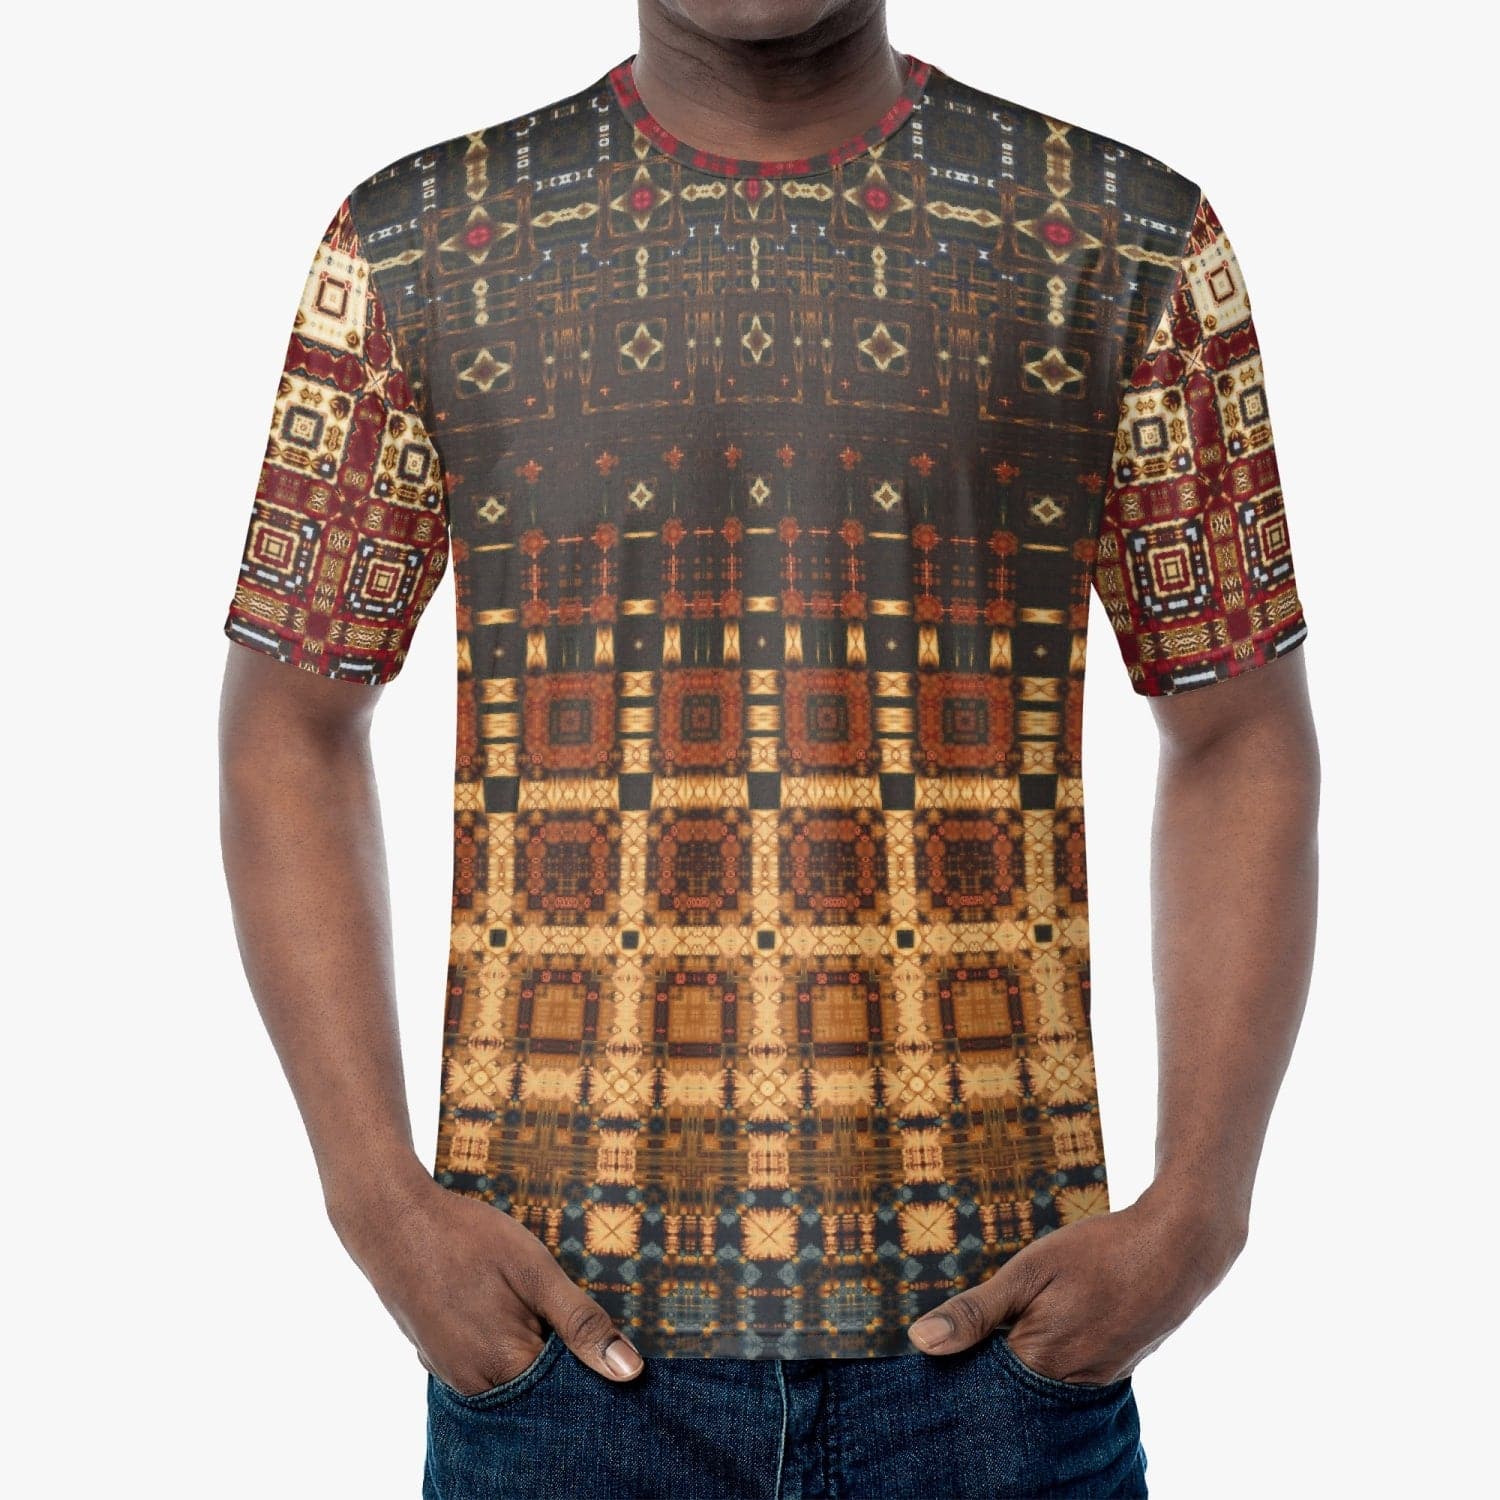 Orange and Brown Patterned Handmade T-shirt for Men by Sensus Studio Design